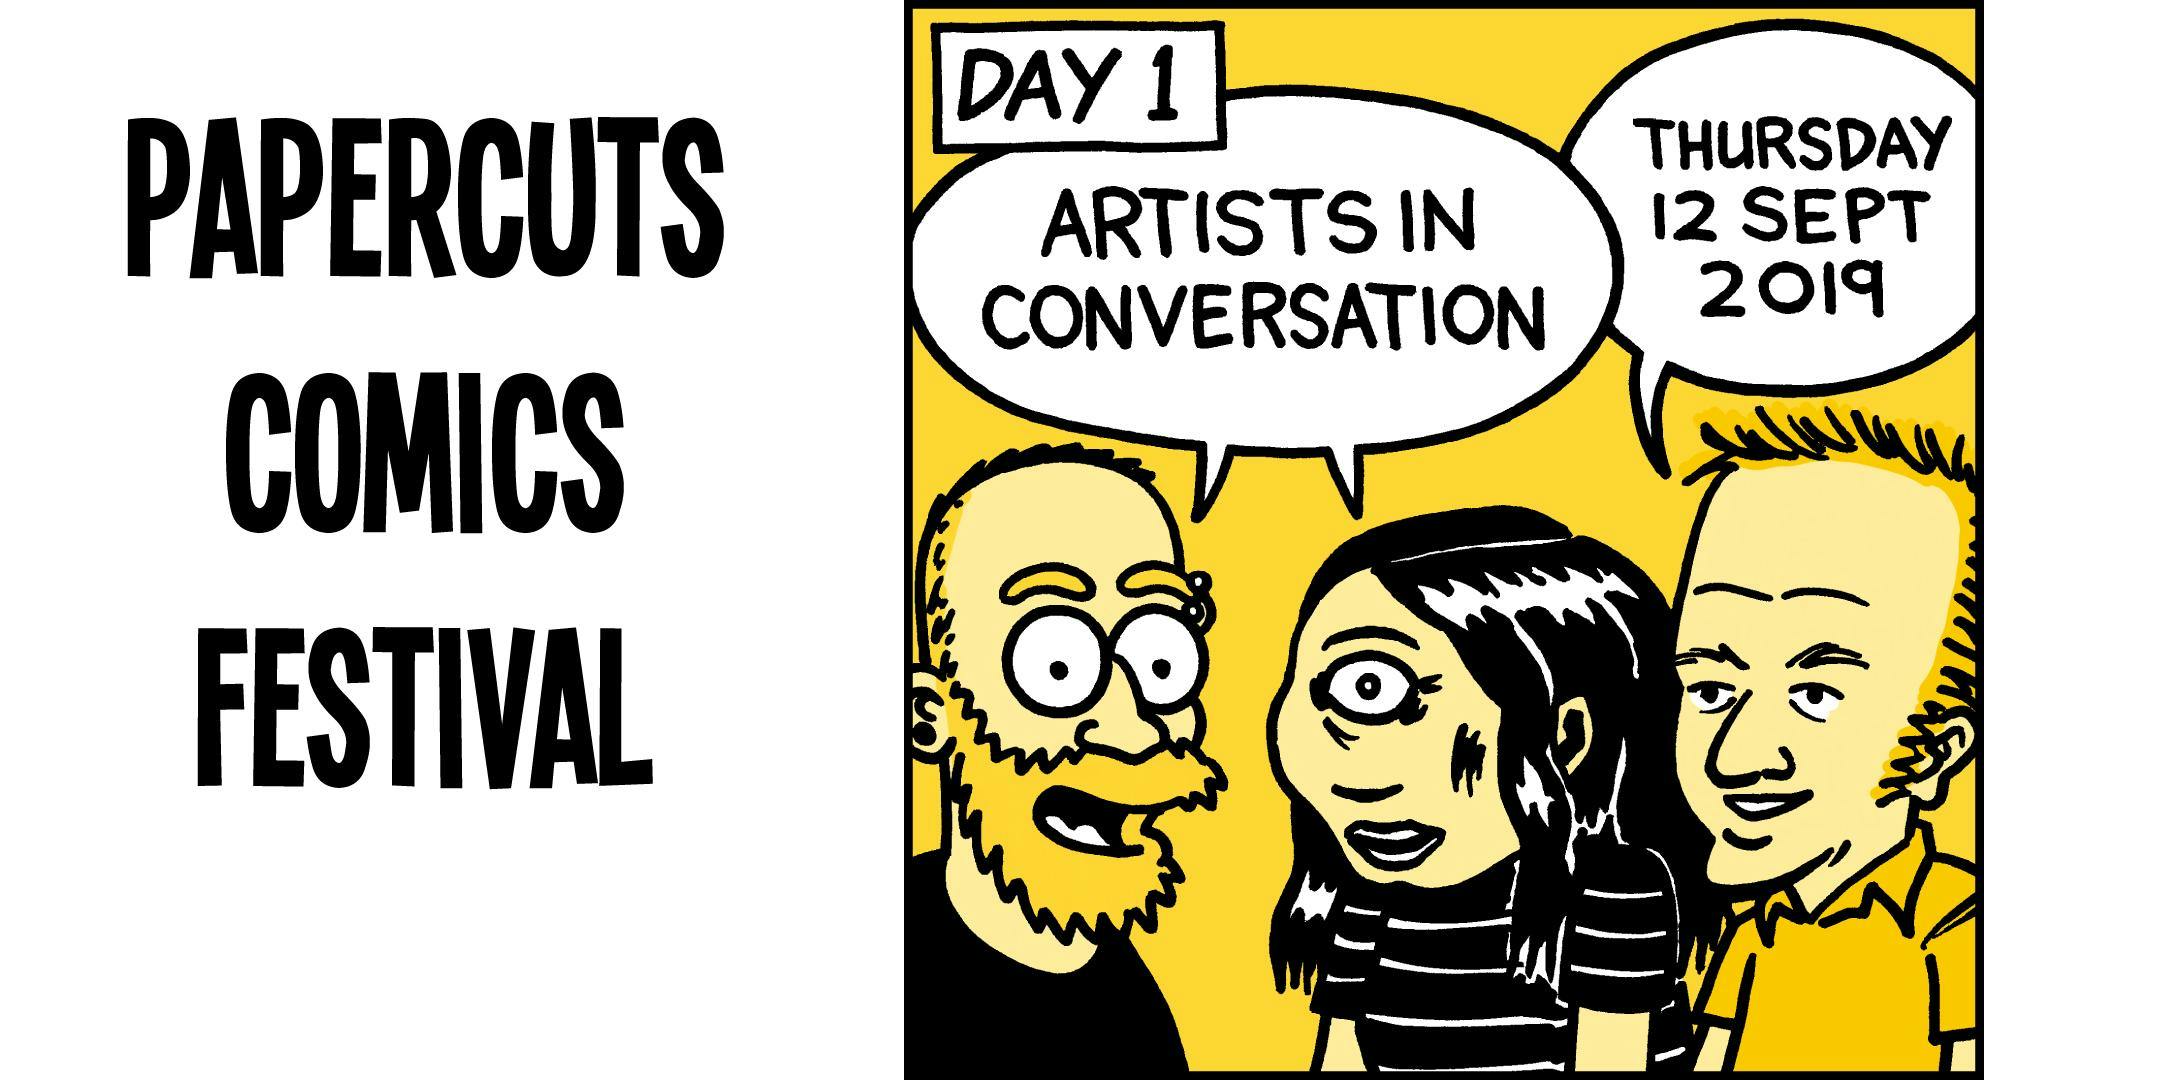 Artists in Conversation - Papercuts Comics Festival day 1